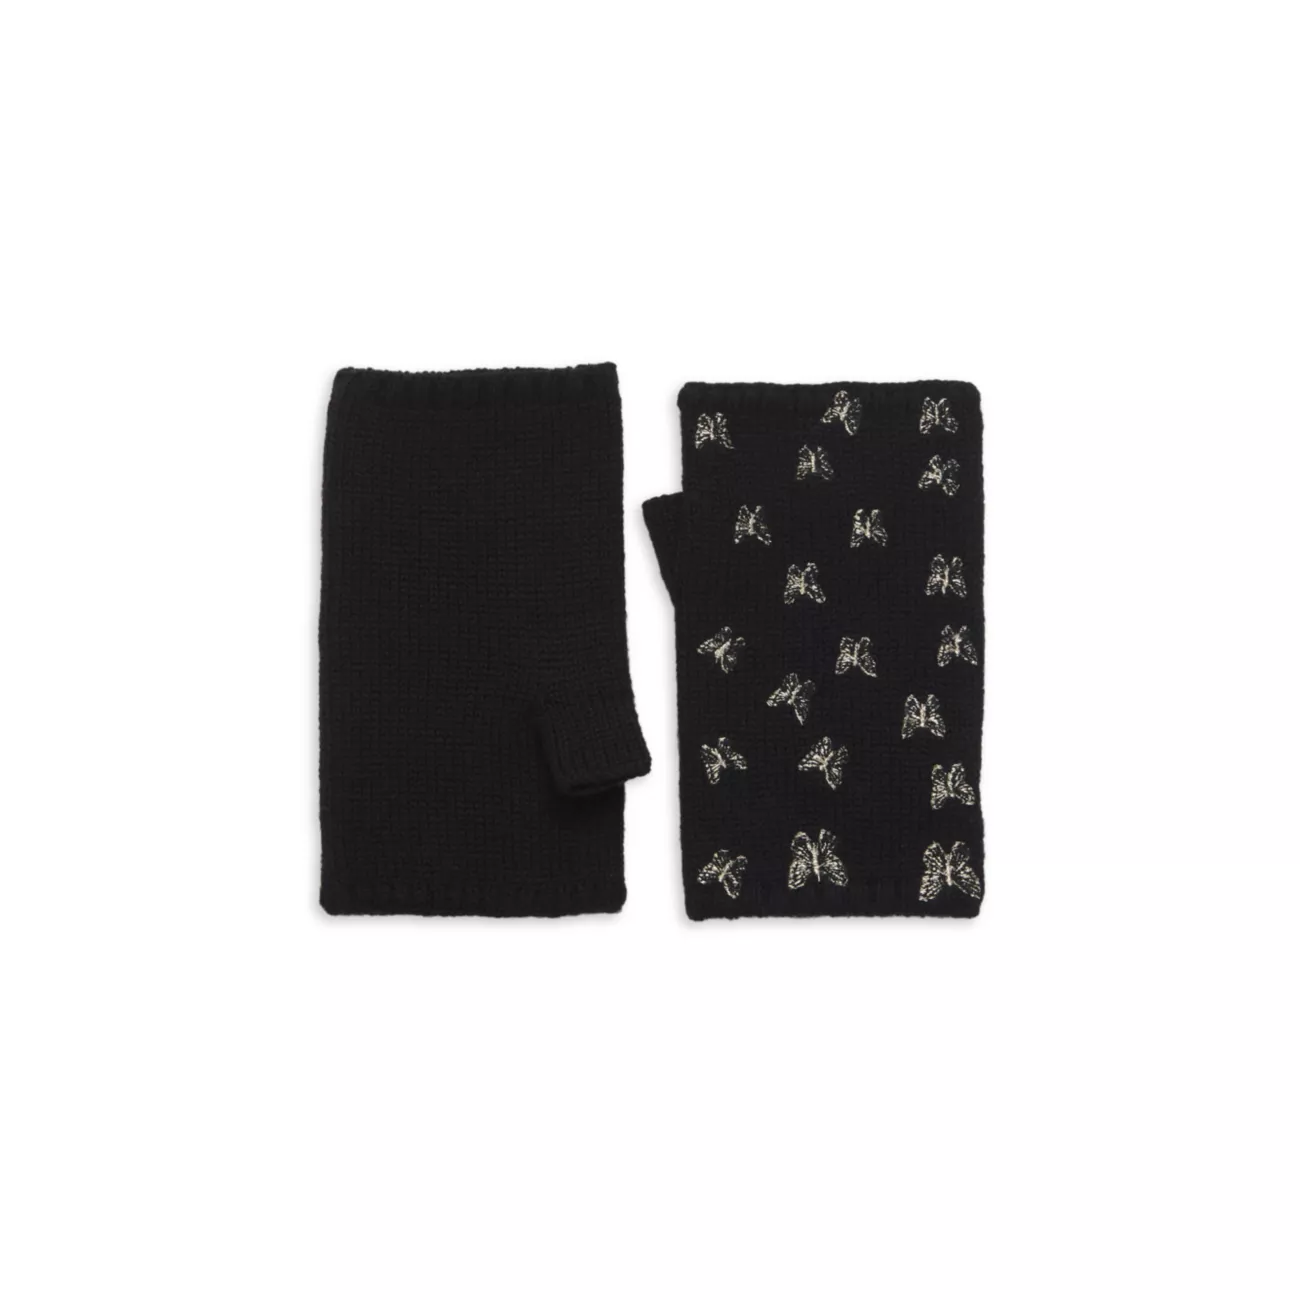 Перчатки из шерсти мериноса с вышивкой для девочек Carolyn Rowan x Stephanie Gottlieb Carolyn Rowan